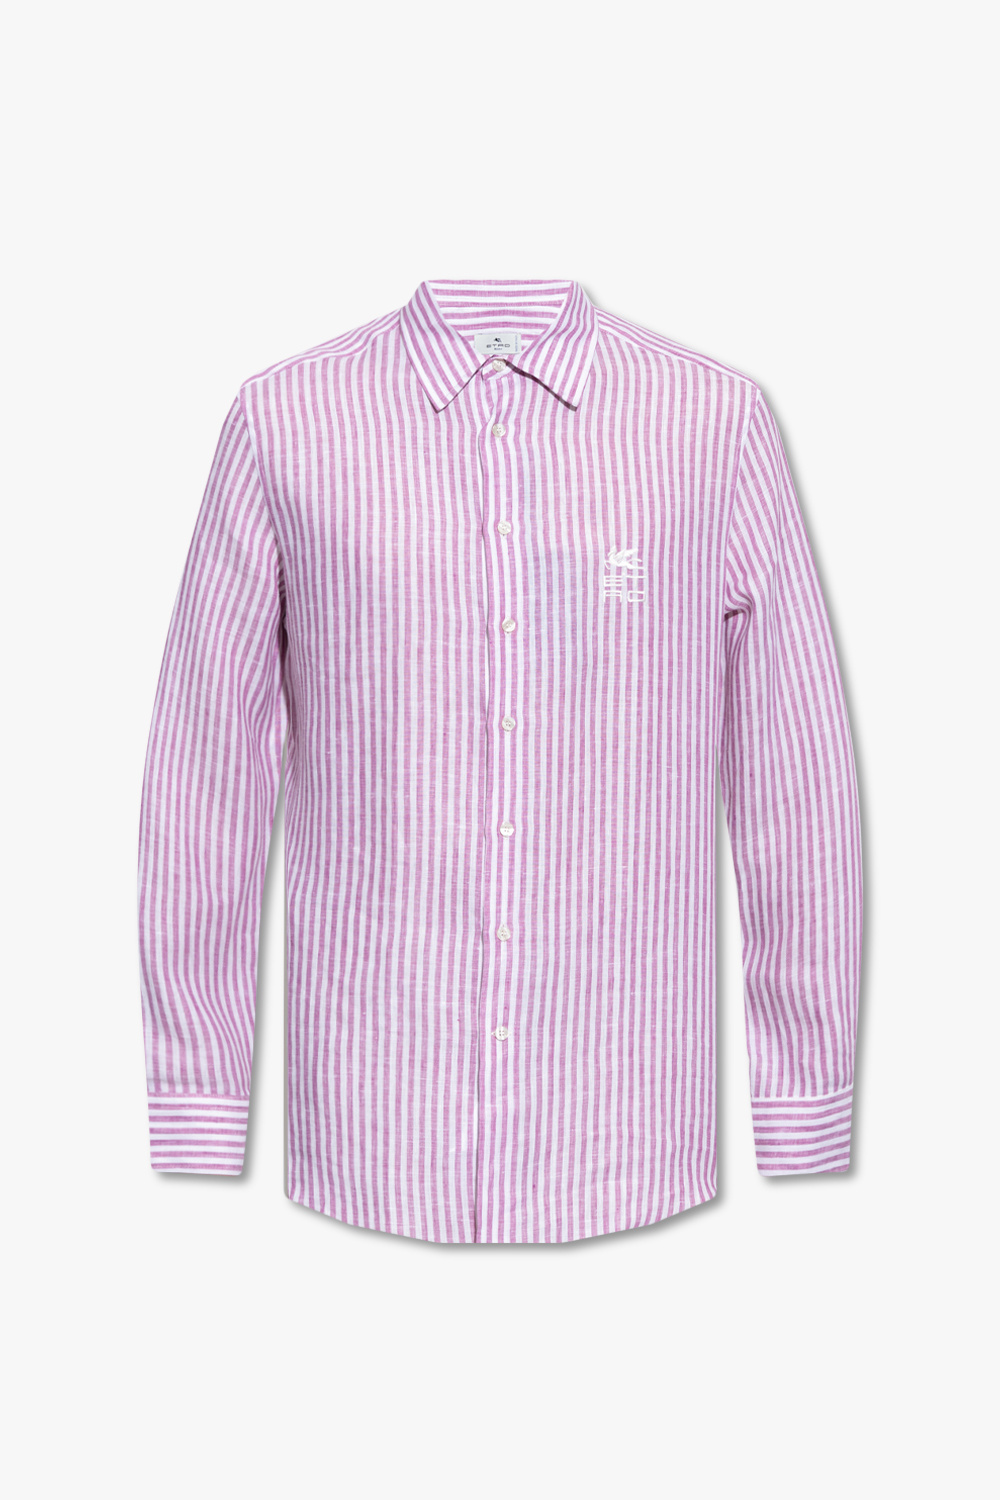 Etro Linen company shirt